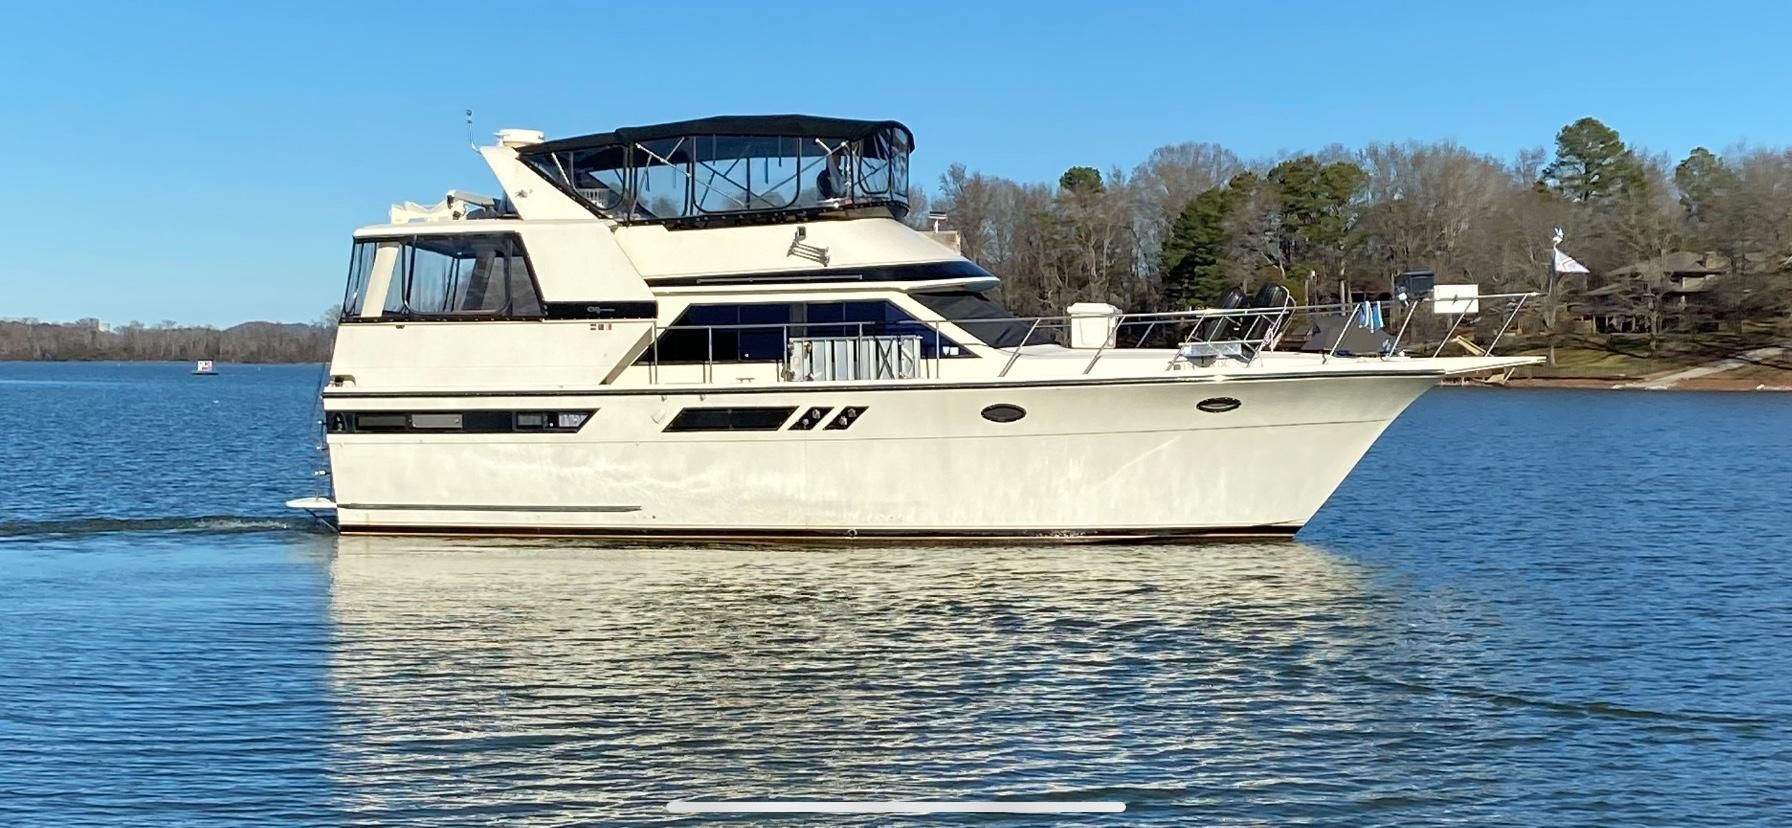 45 foot motor yacht